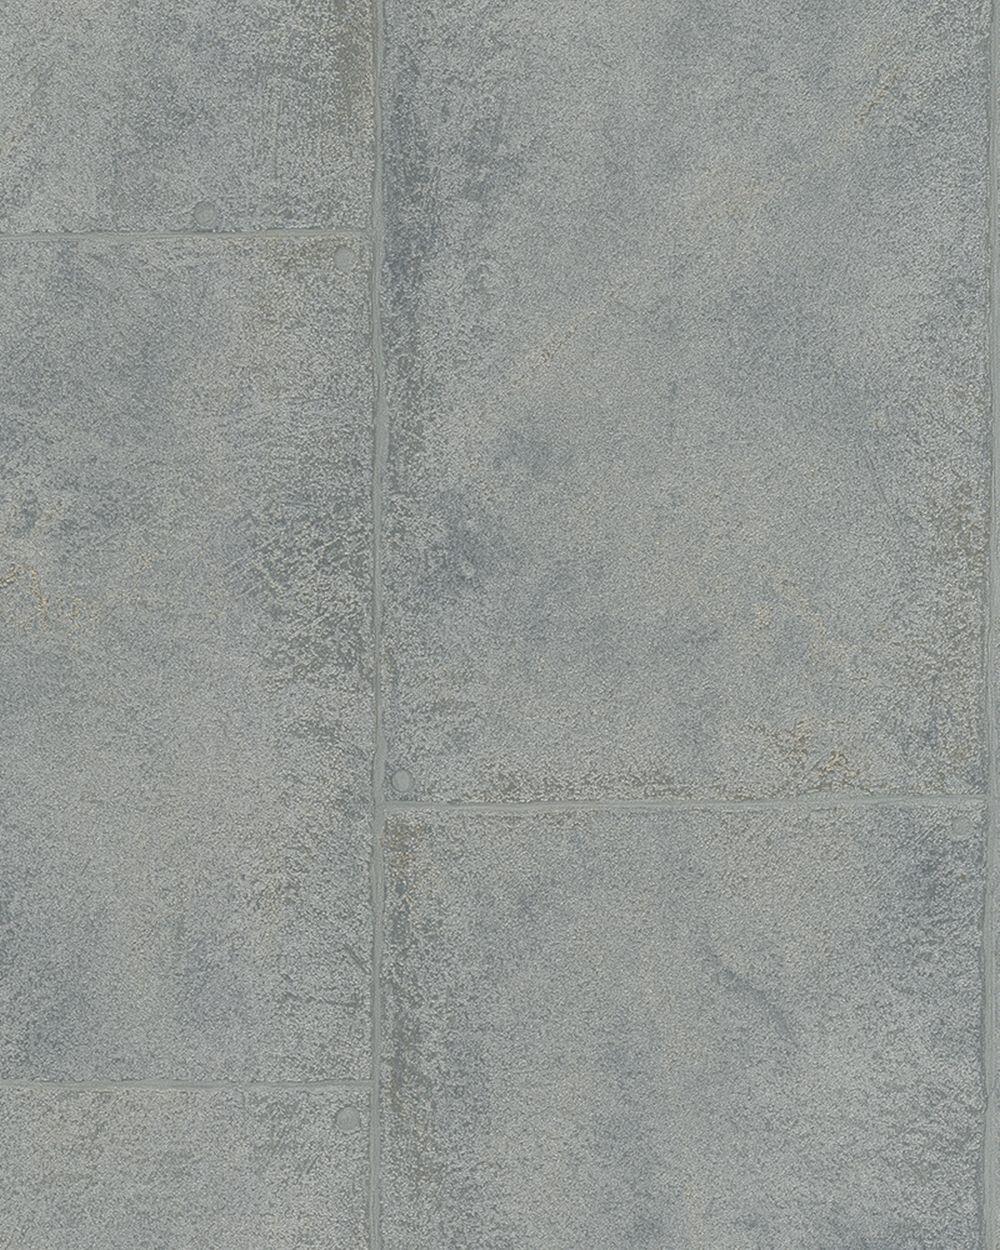 Wallpaper cement style slab silver grey gloss Marburg 59334